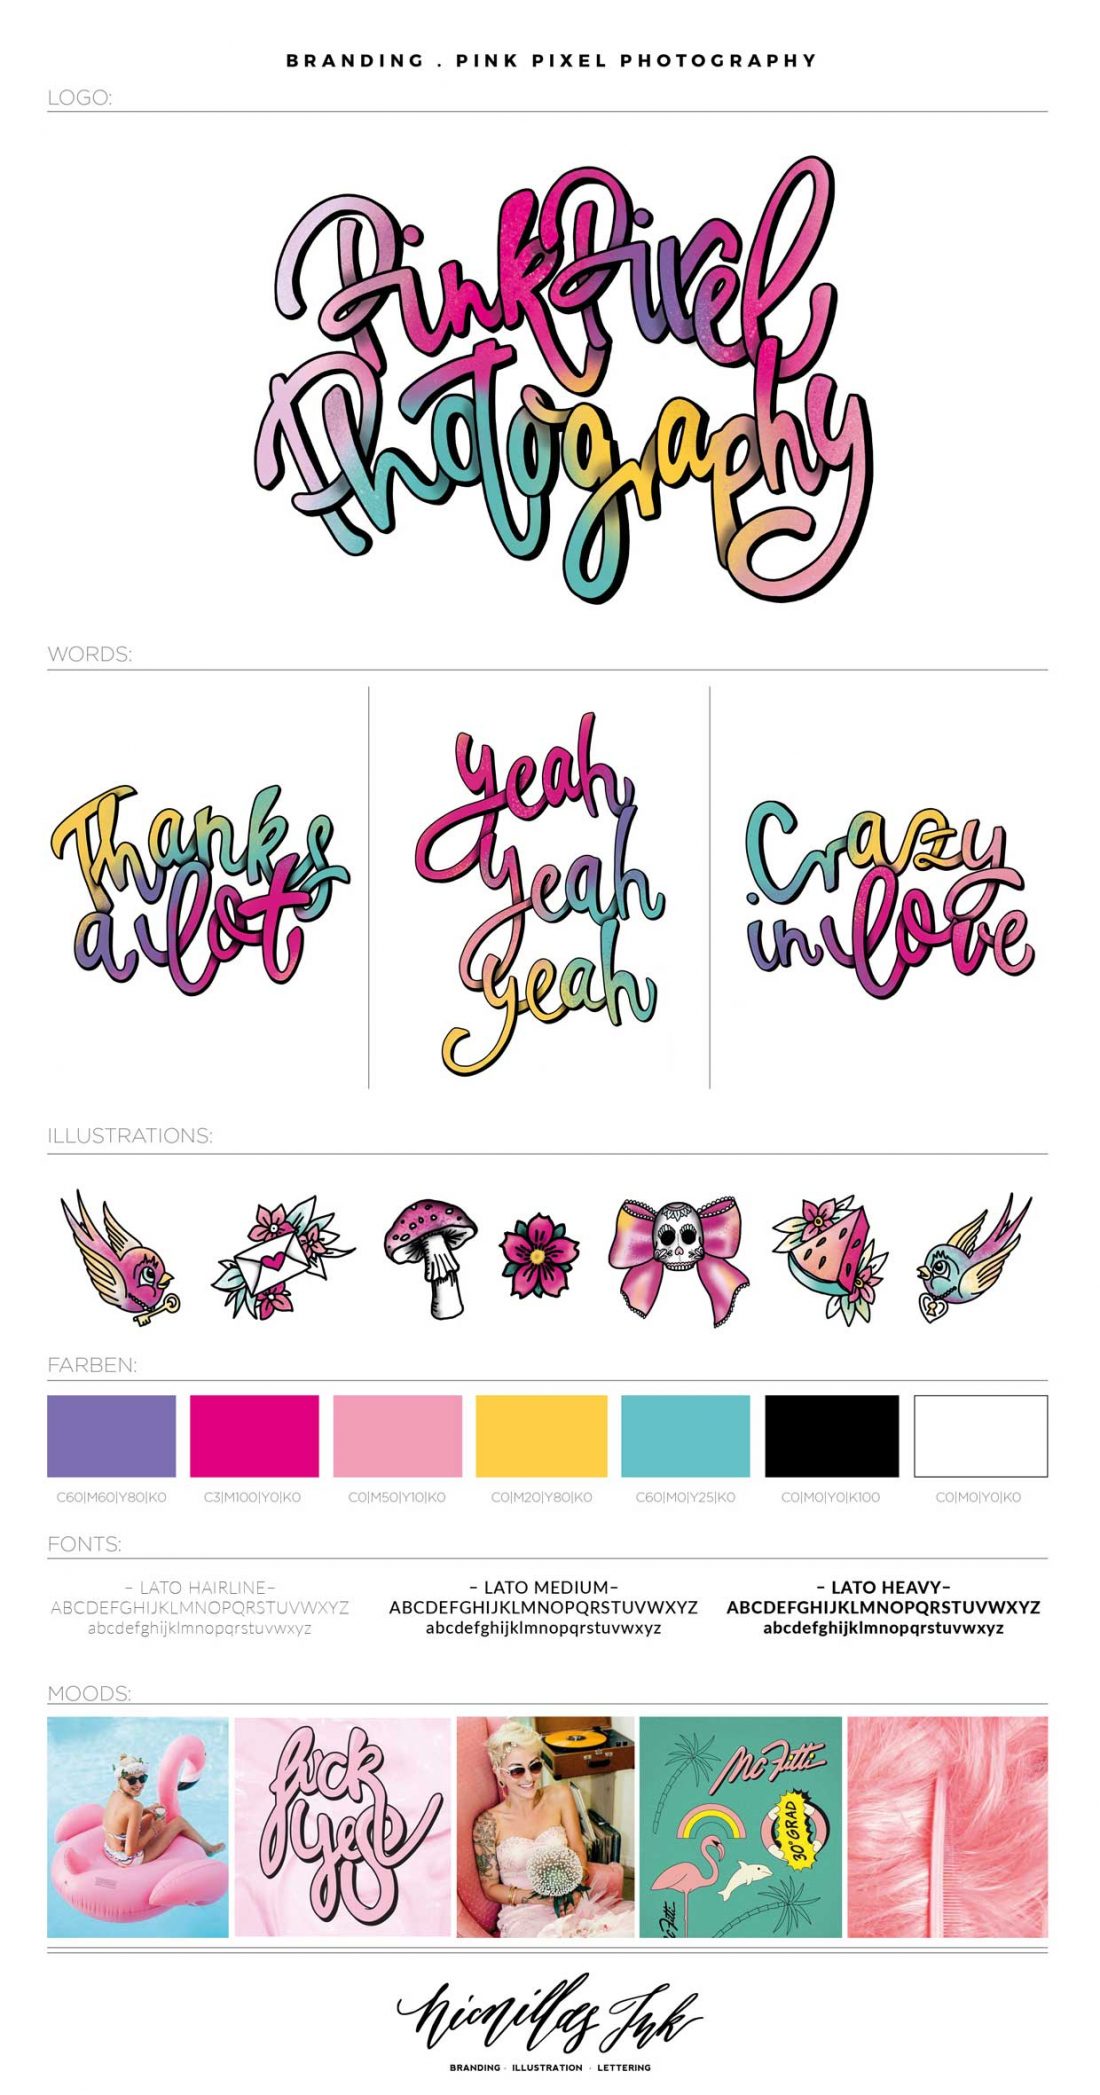 pink Pixel Photography | custom logo design, illustrations, branding, brand board – by Nicnillas ink